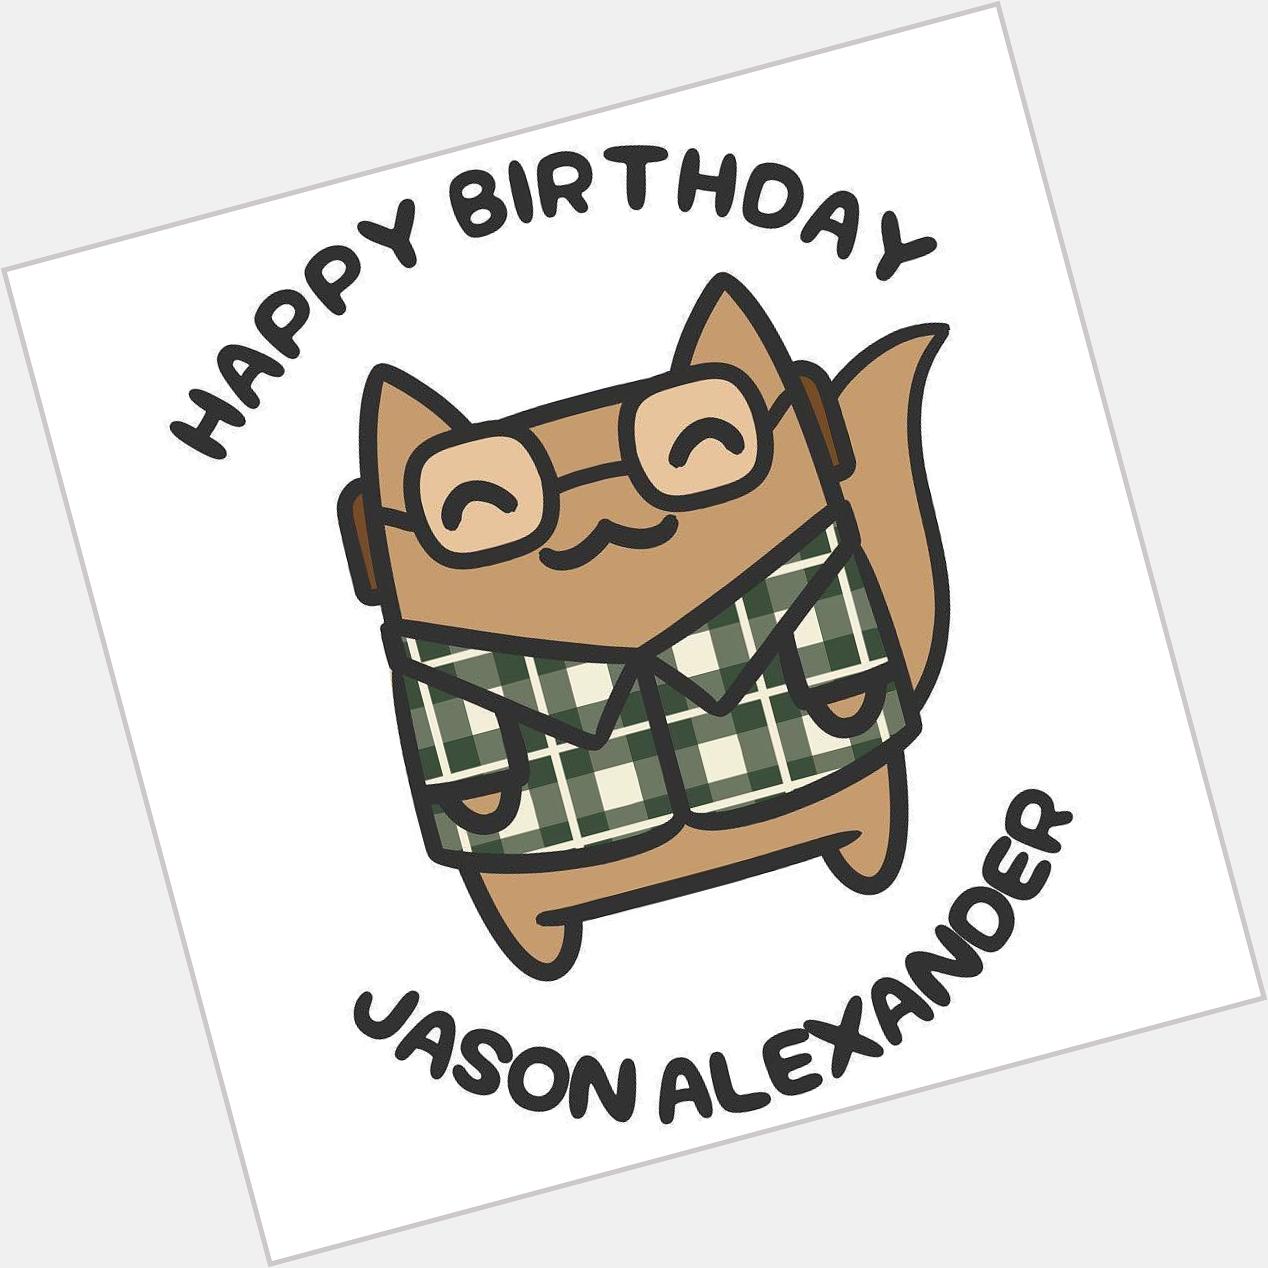 Happy Birthday, Jason Alexander!  